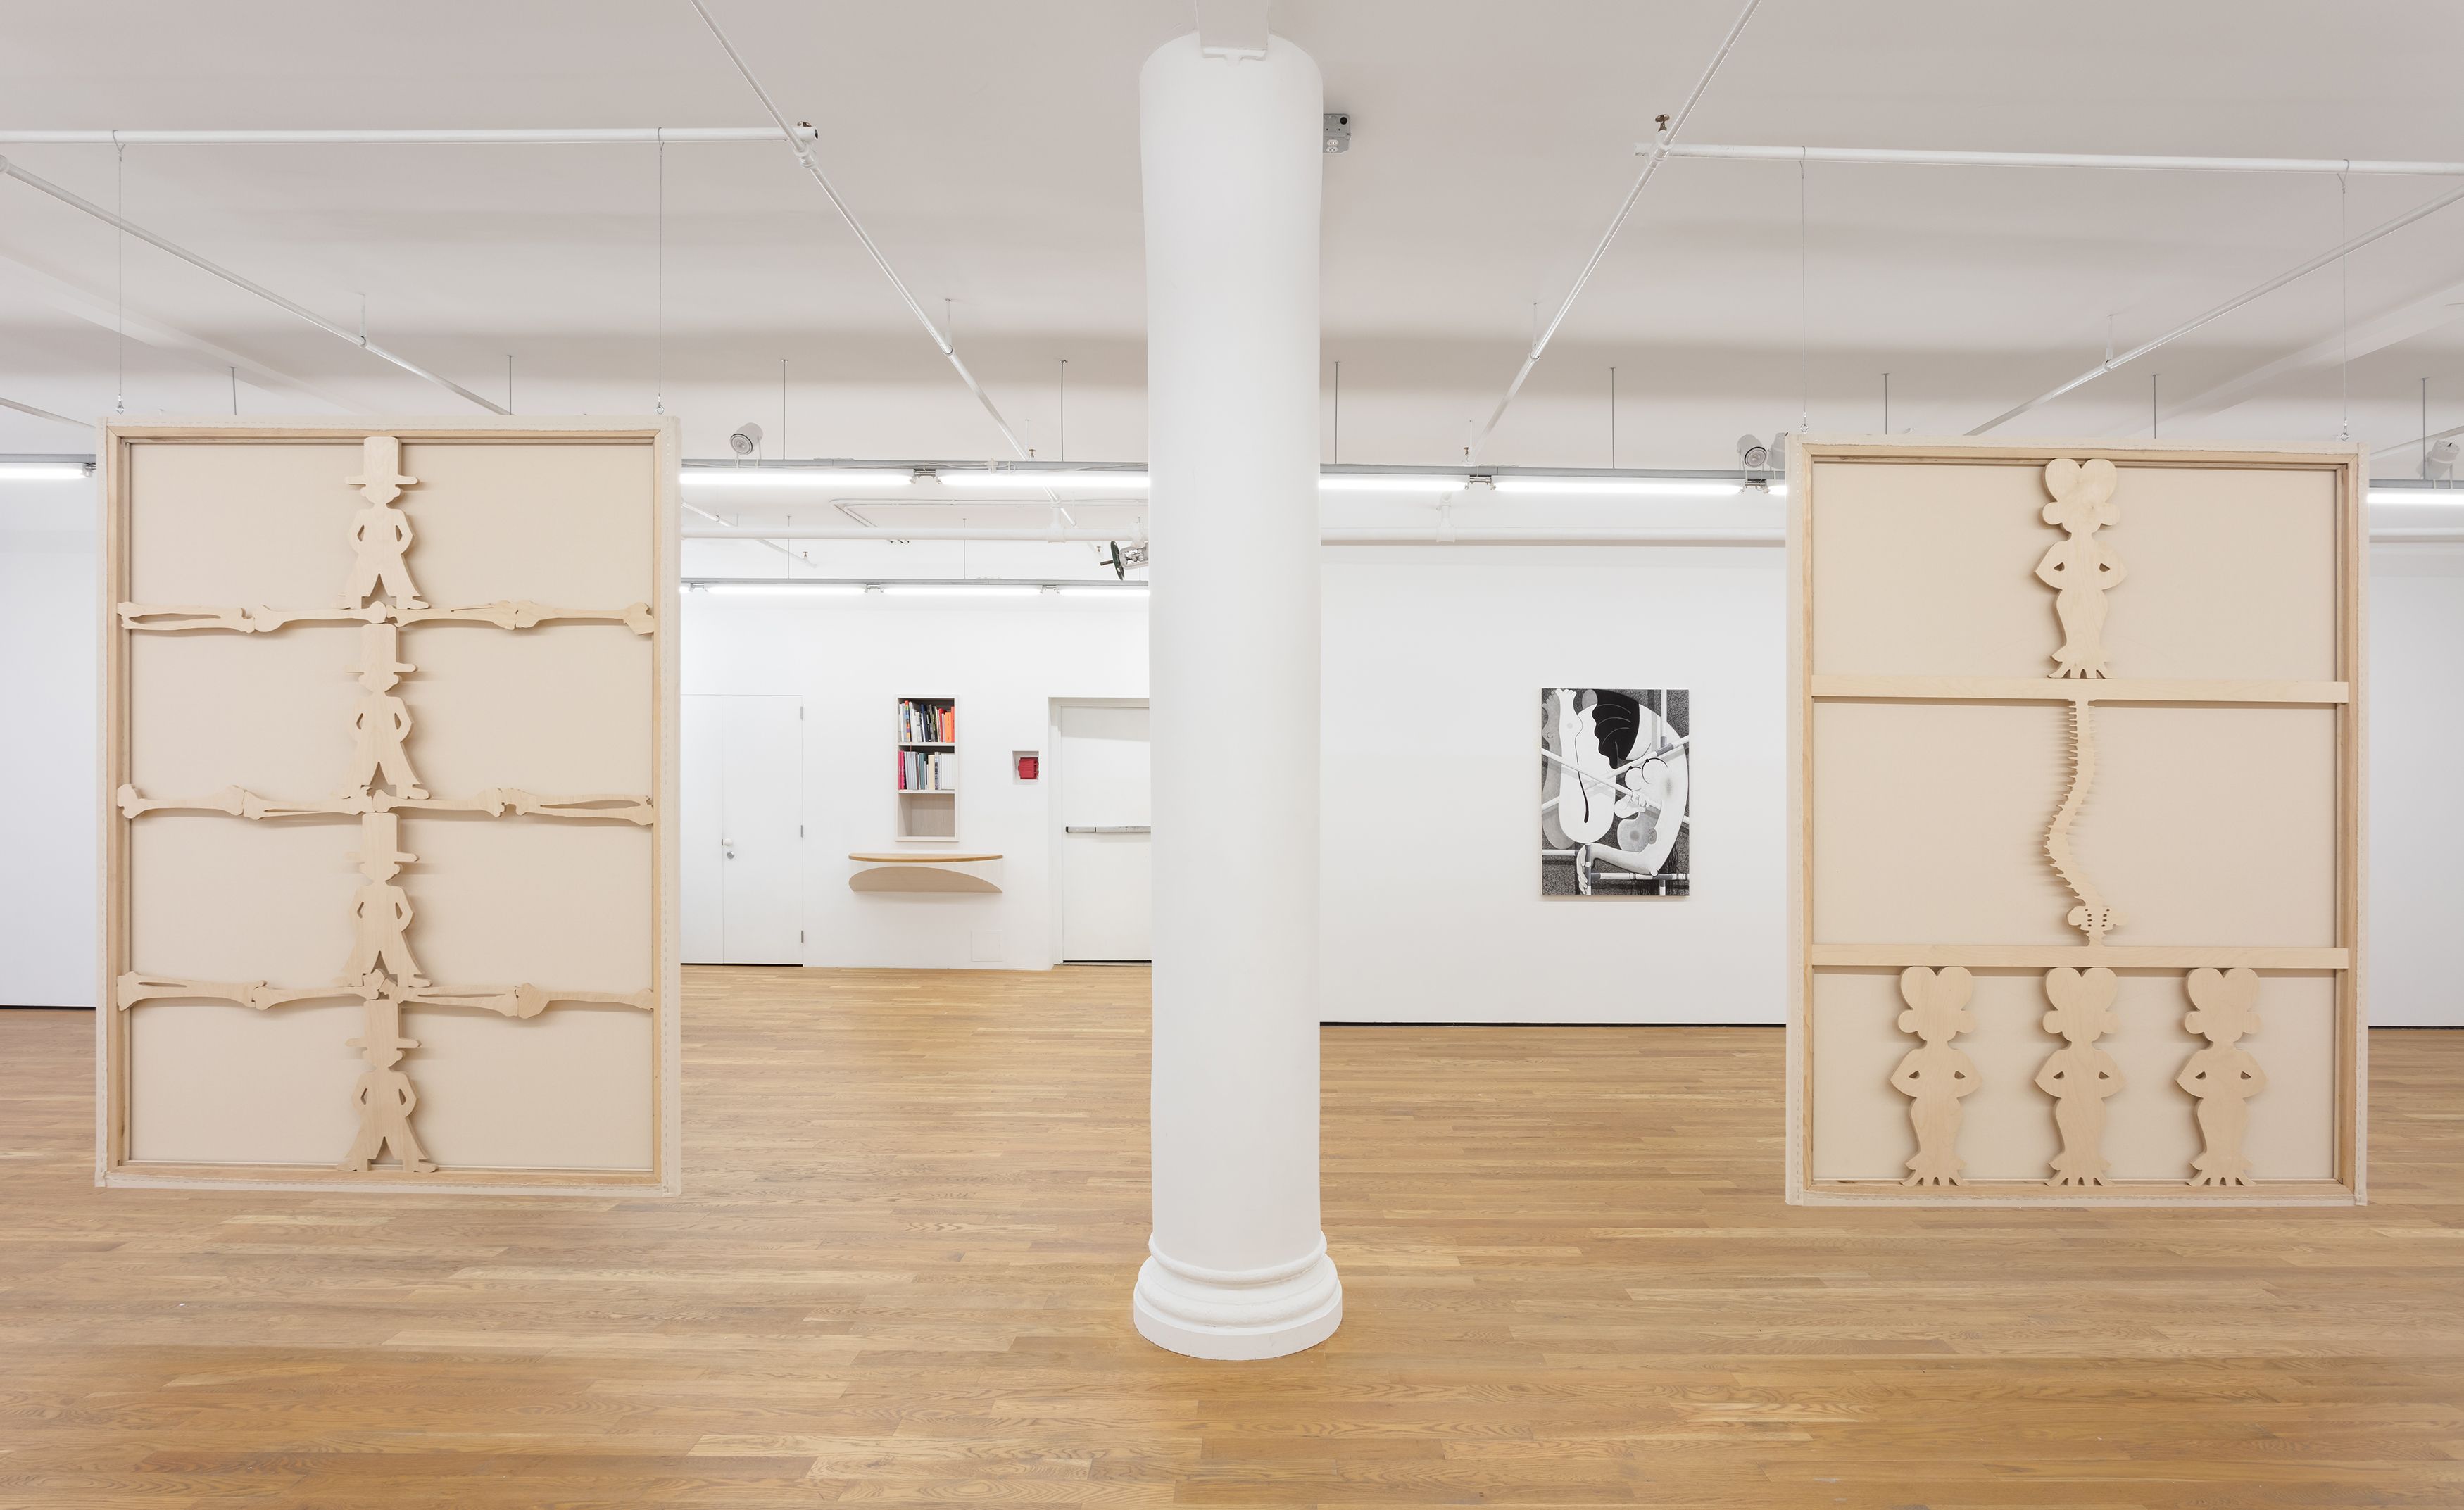 Cindy Ji Hye Kim, Verses from the Apocalypse, 2019, installation view, Foxy Production, New York